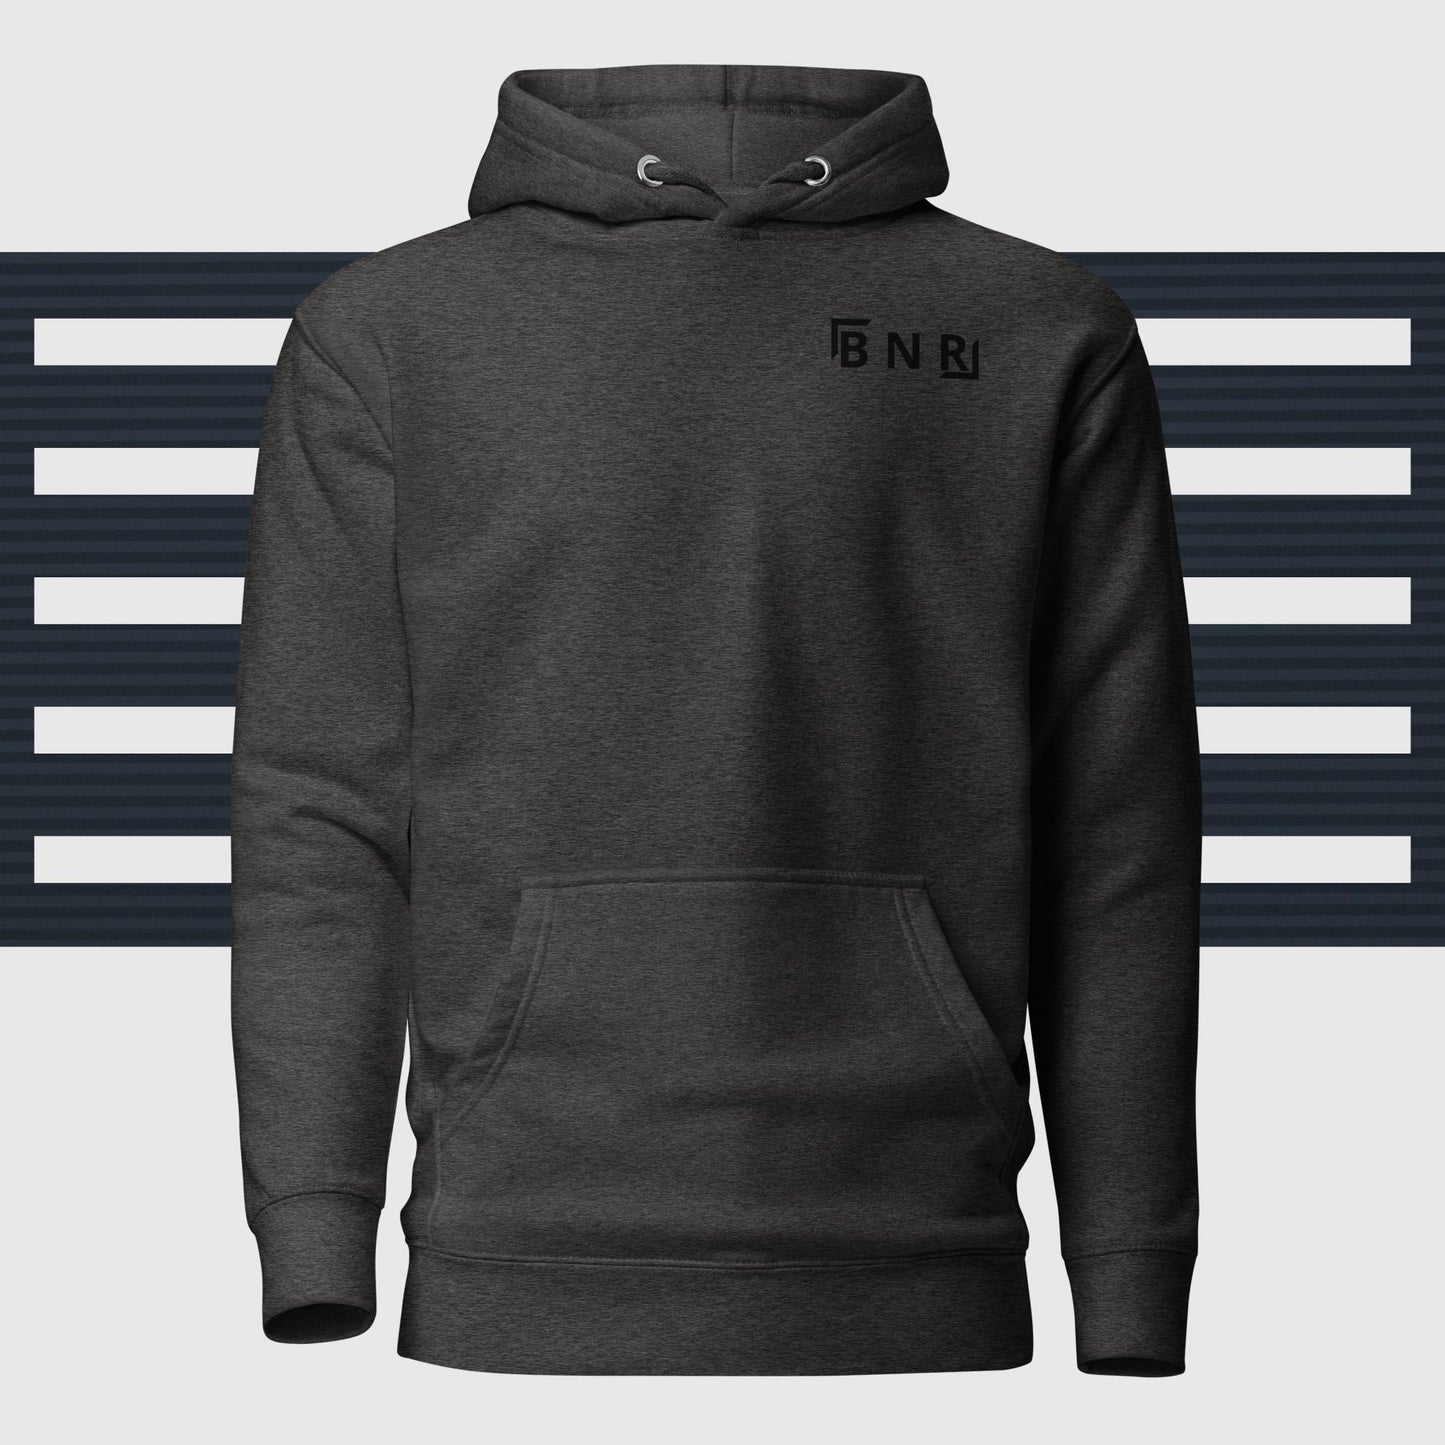 Unisex mountain hoodie